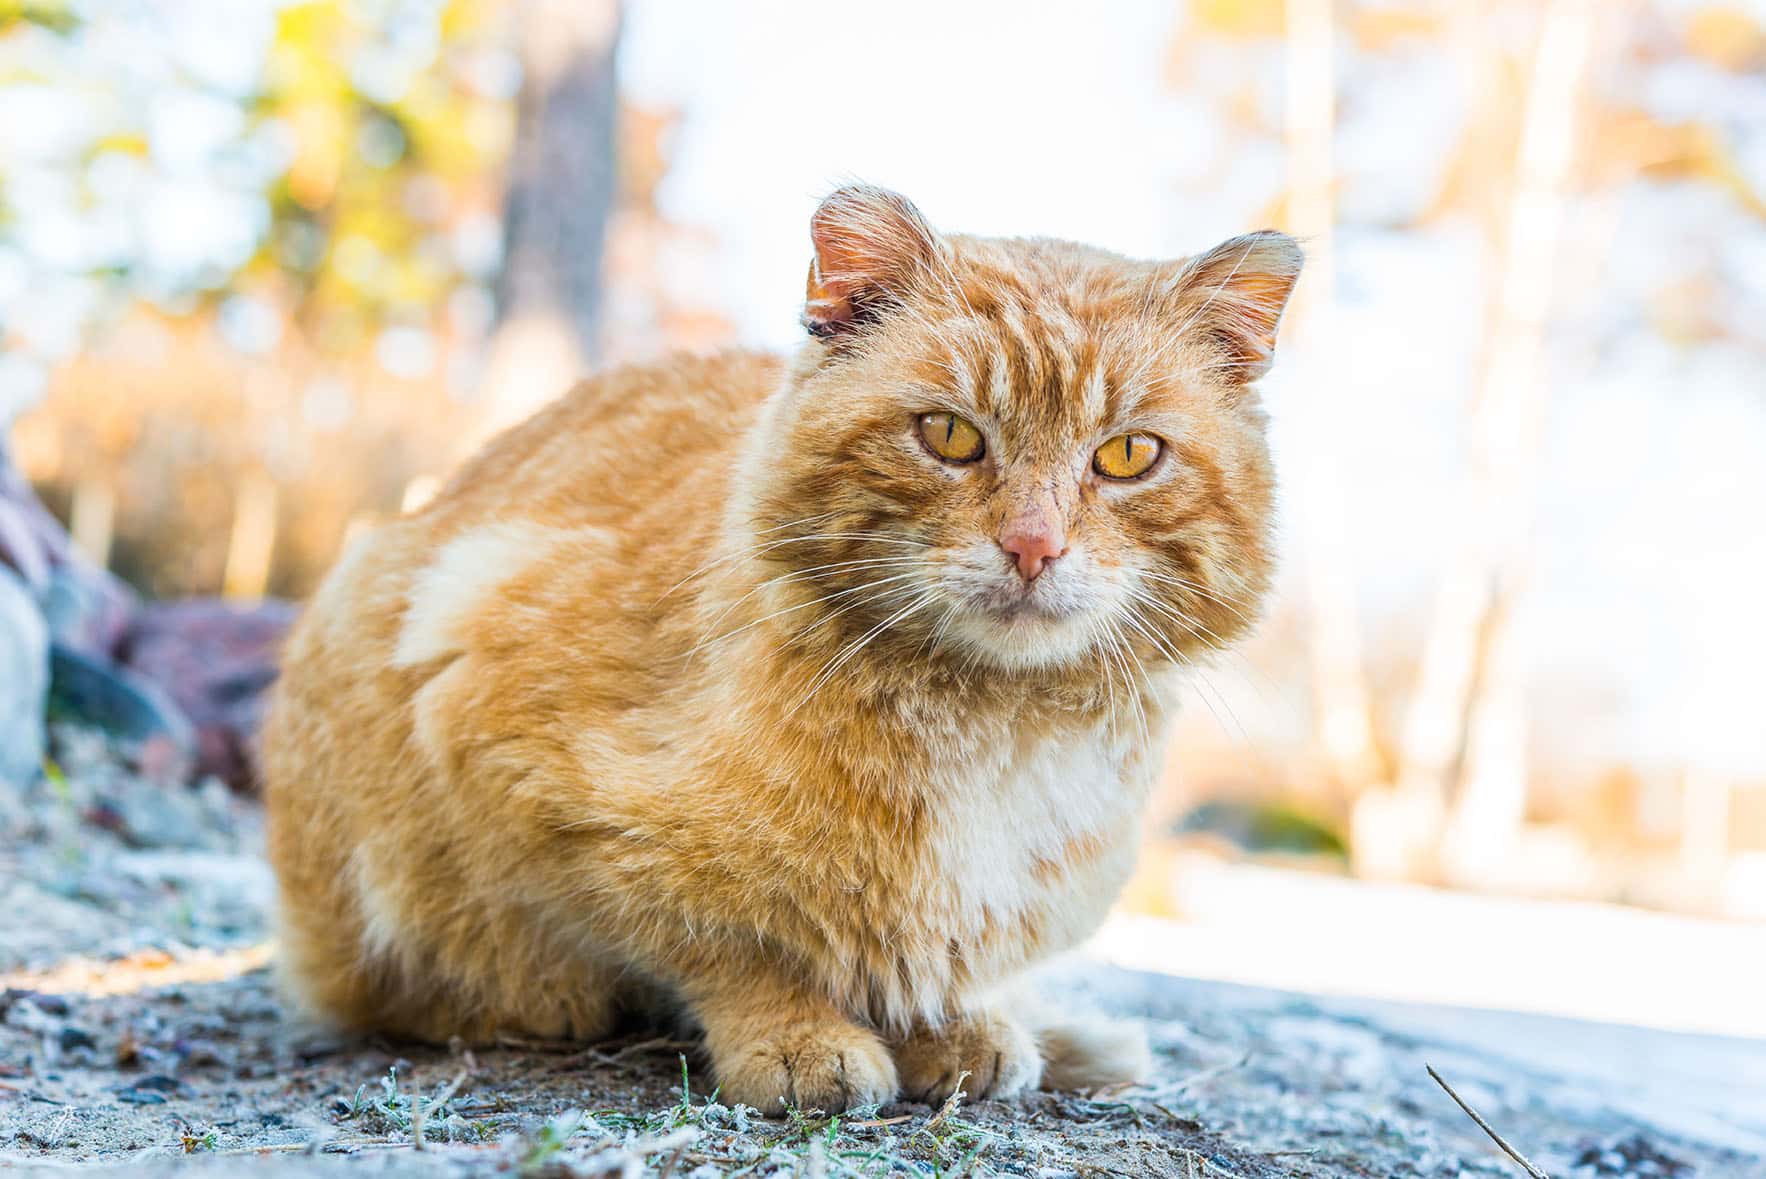 old cat_Georgii Shipin, Shutterstock